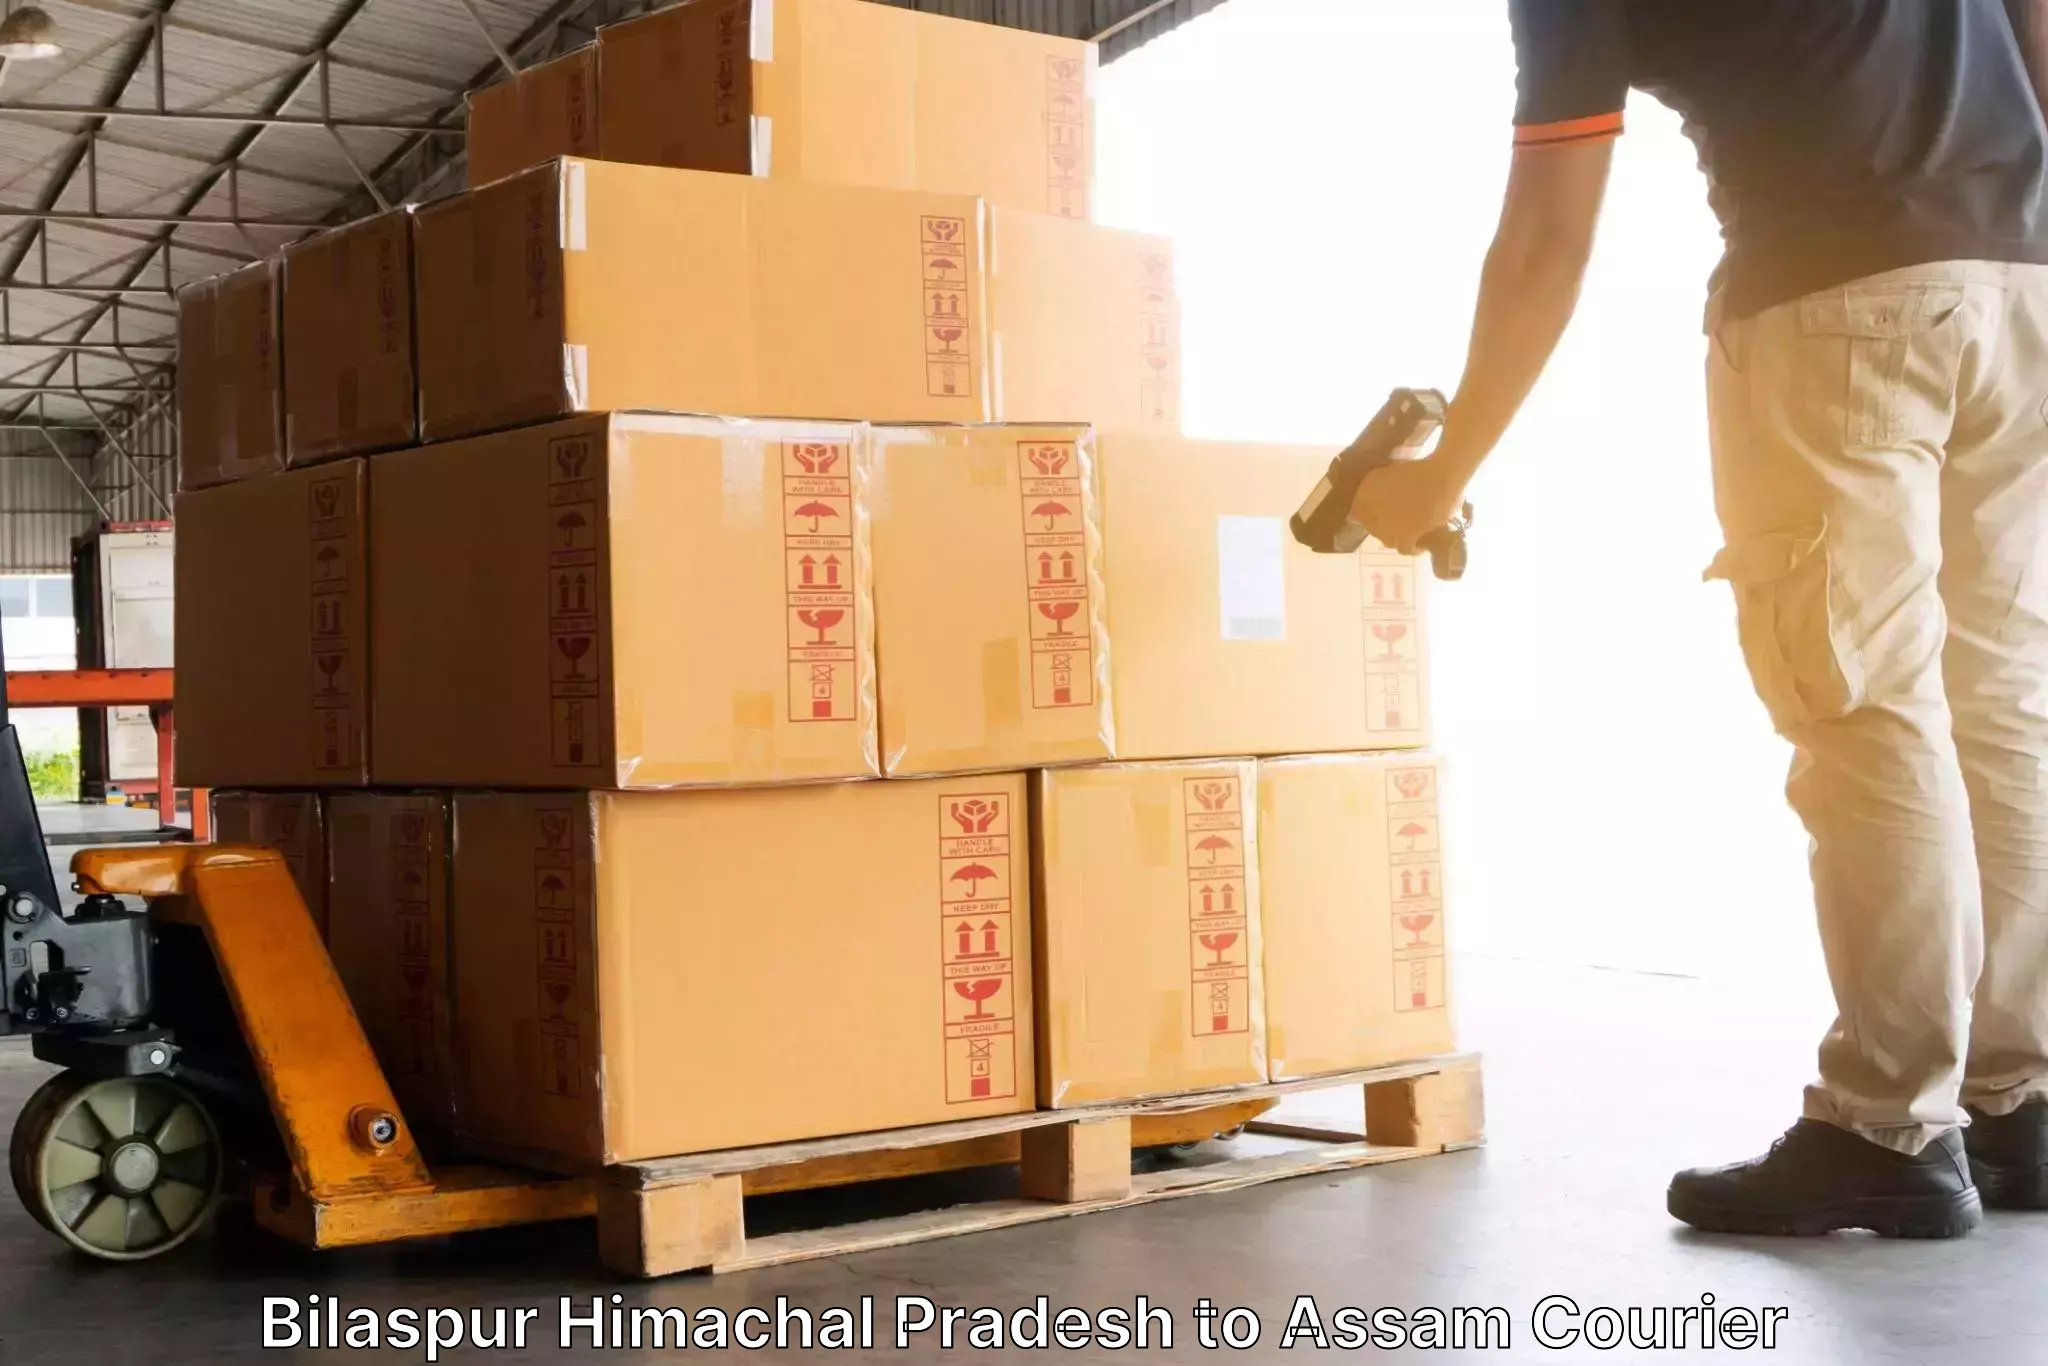 Express delivery capabilities Bilaspur Himachal Pradesh to Mayang